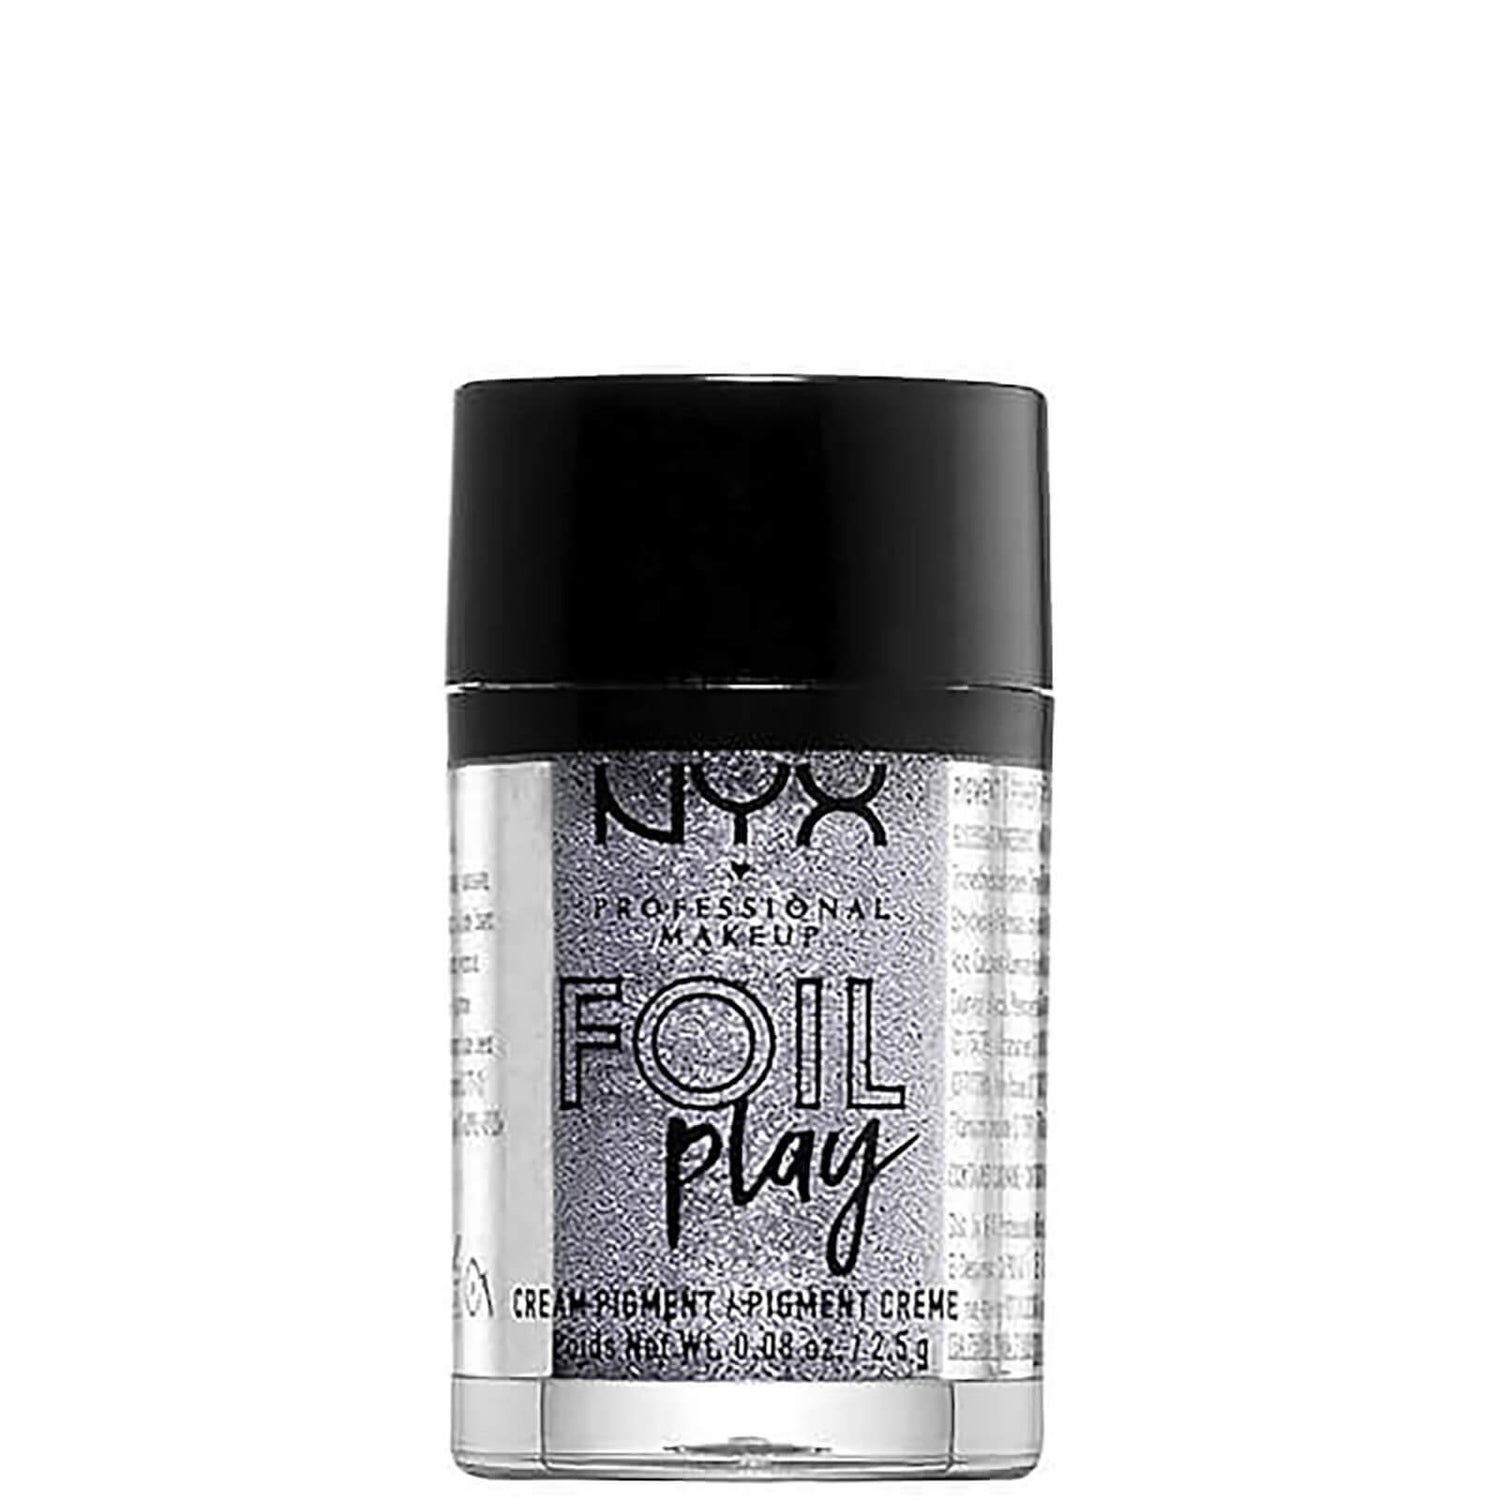 Pigment Crème Foil Play NYX Professional Makeup (différentes teintes disponibles)